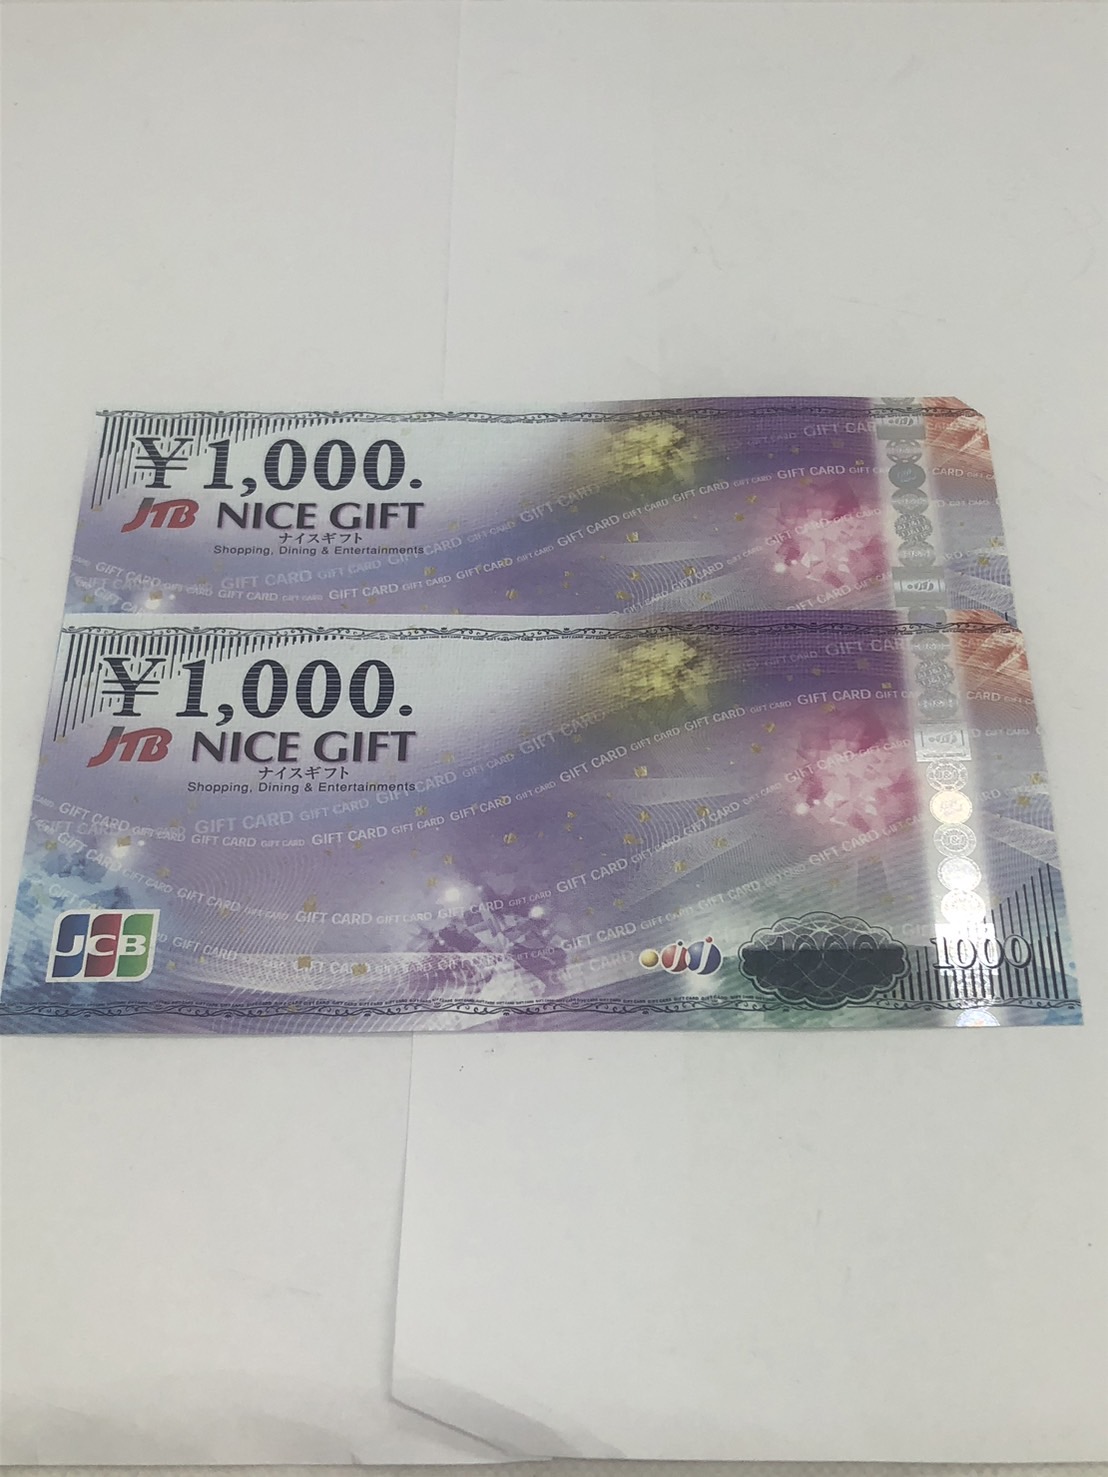 JTBナイスギフト 1000円 商品券をお買取り致しました！